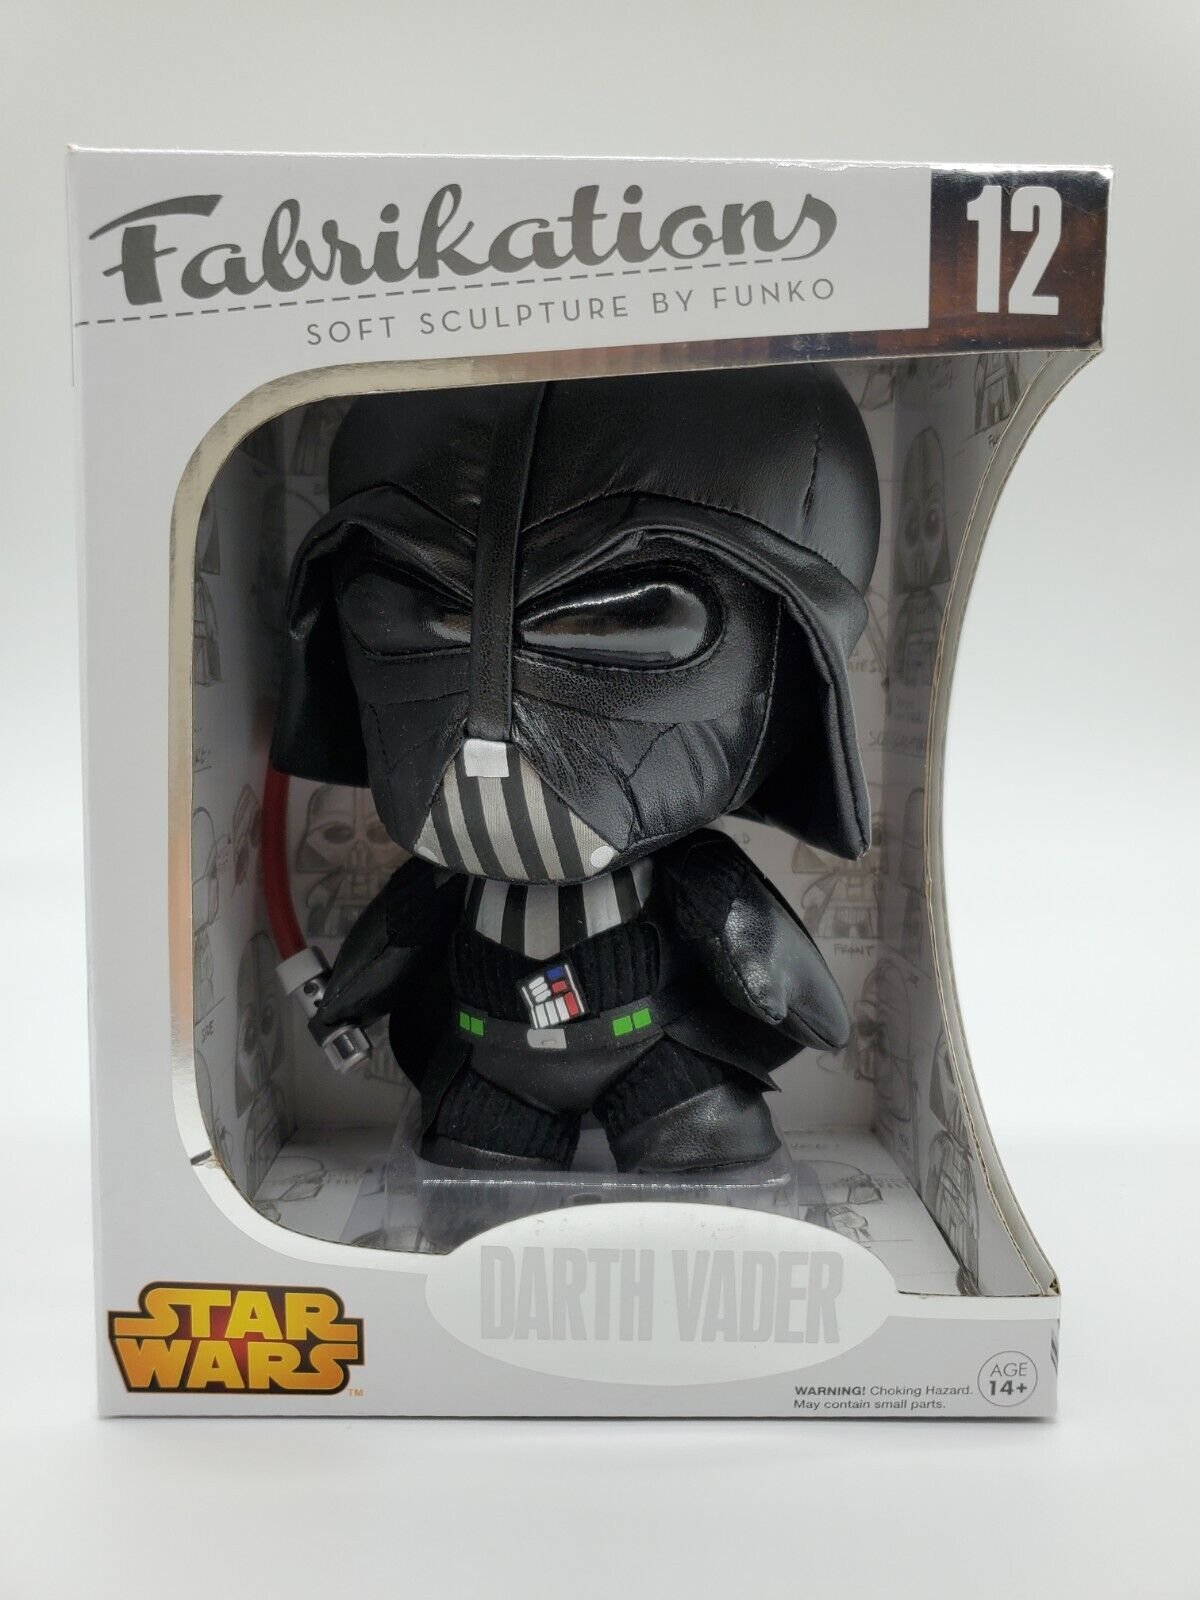 Star Wars Darth Vader Popcorn Maker Underground Toys